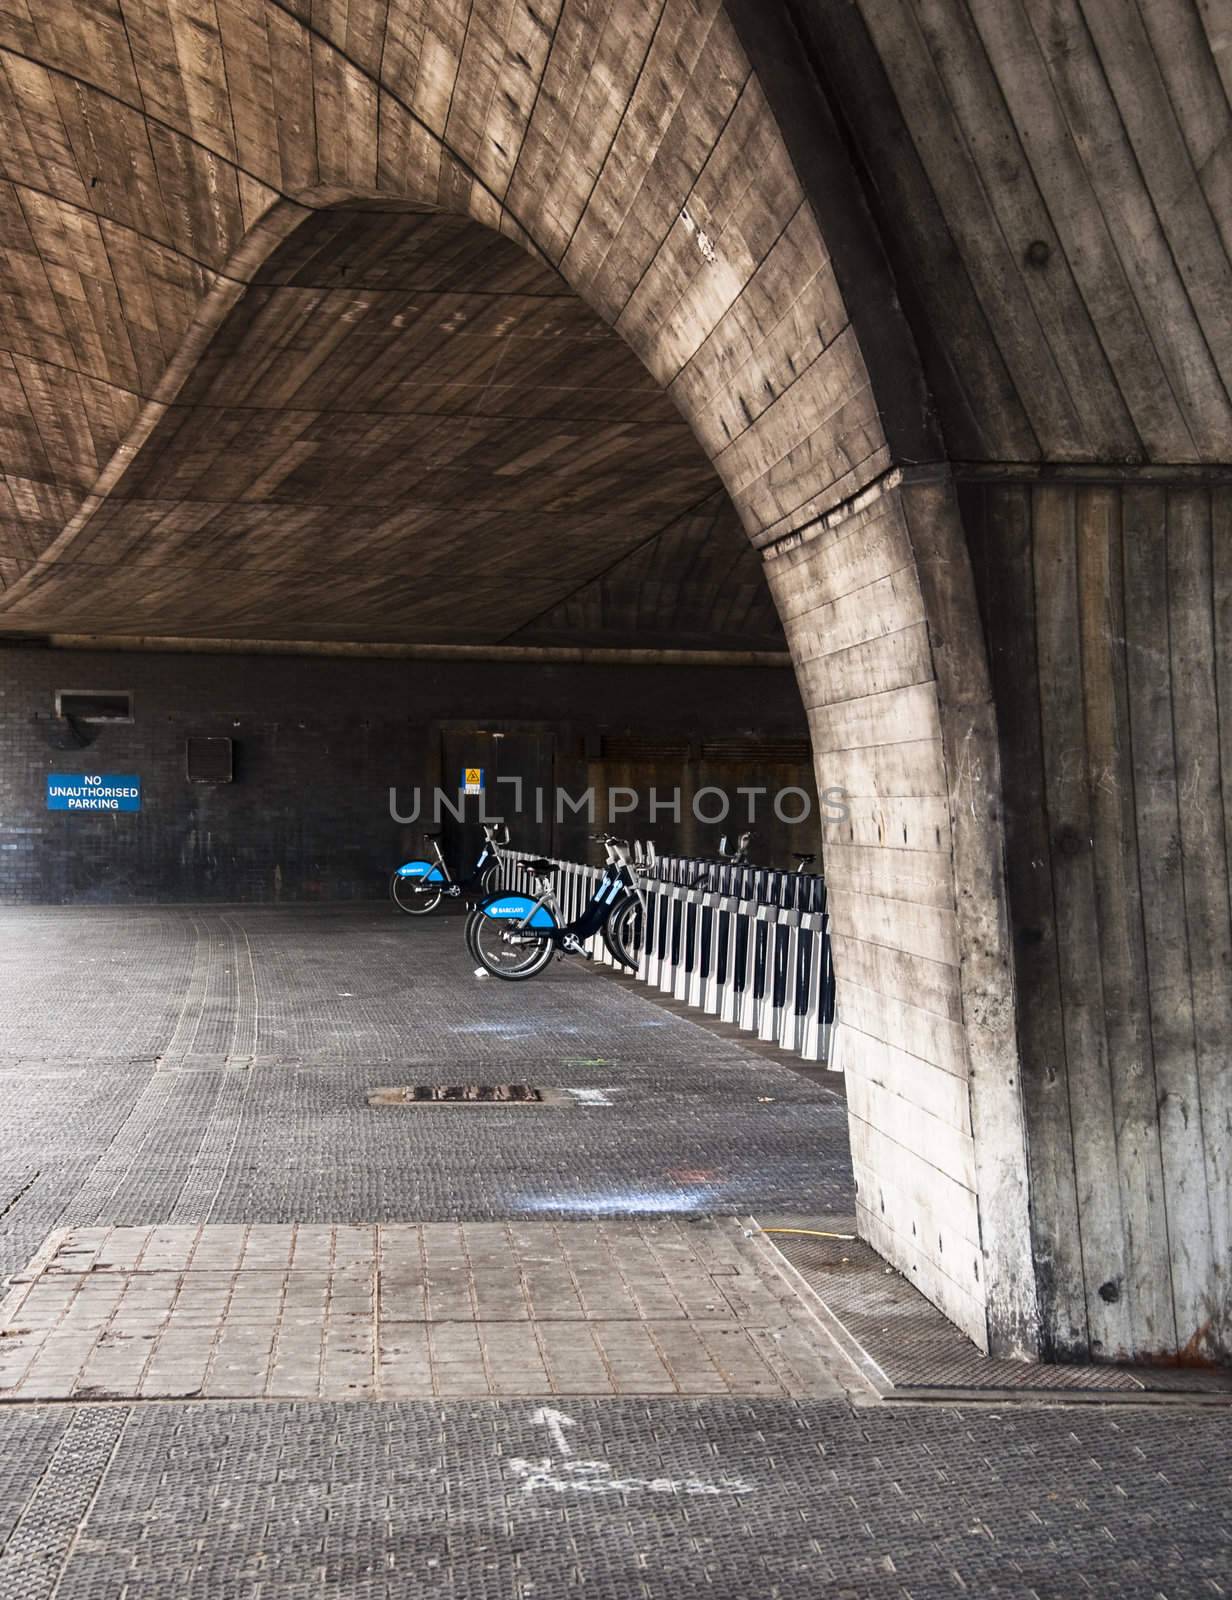 Barclays bicycle under a bridge in London, UK by dutourdumonde